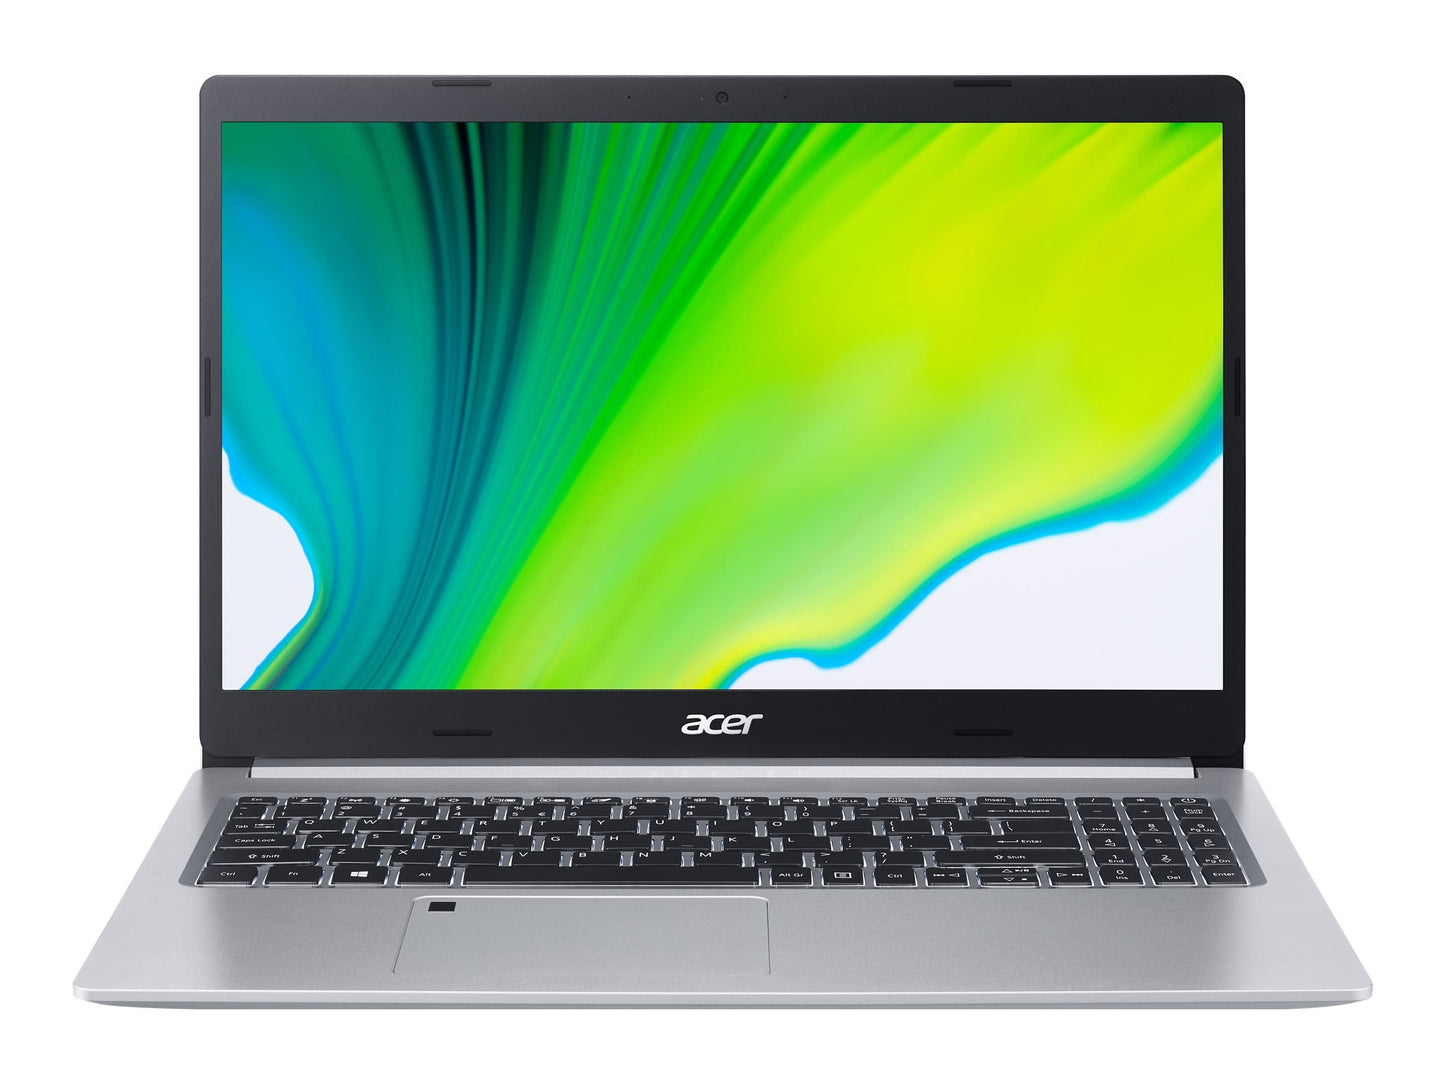 Laptop ACER A514-54, Intel Core i5-1135G7, 8GB, 512GBSSD, 14 Pulgadas Full HD, Win10H, Aluminio Color plata, 1 Año de Seguro Contra Robo Gratis